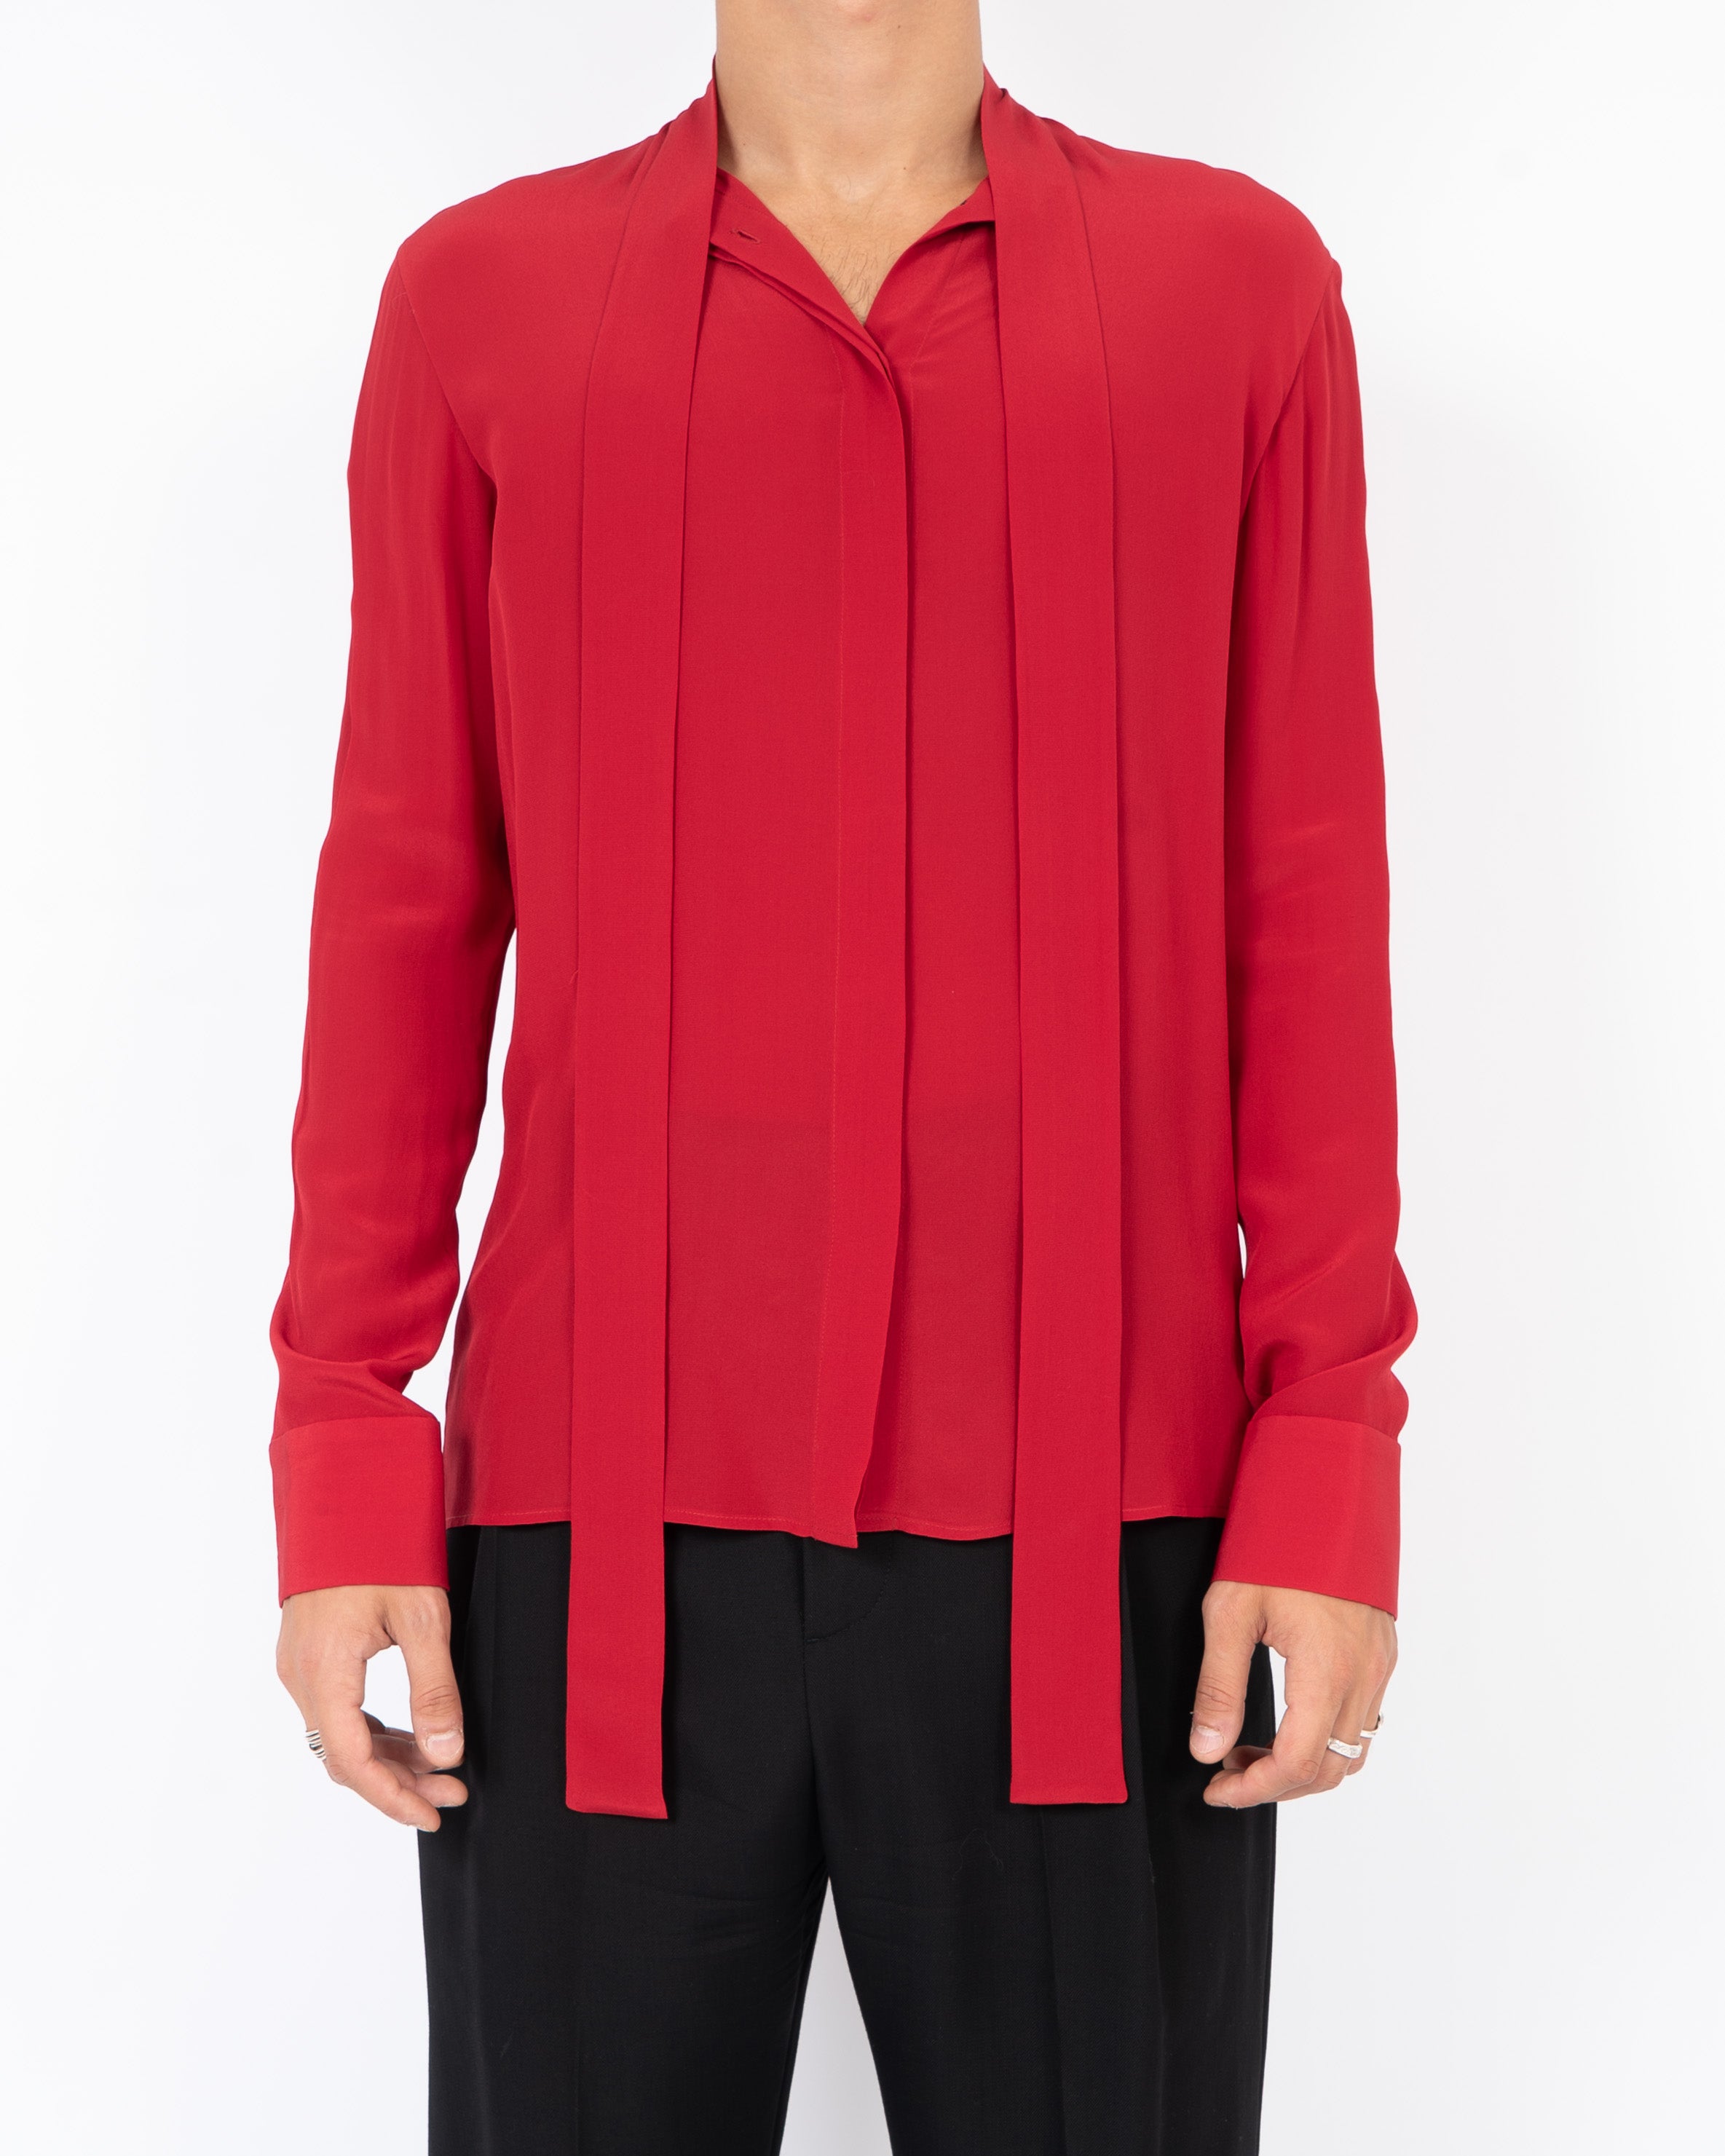 FW19 Sophora Red Silk Shirt Sample